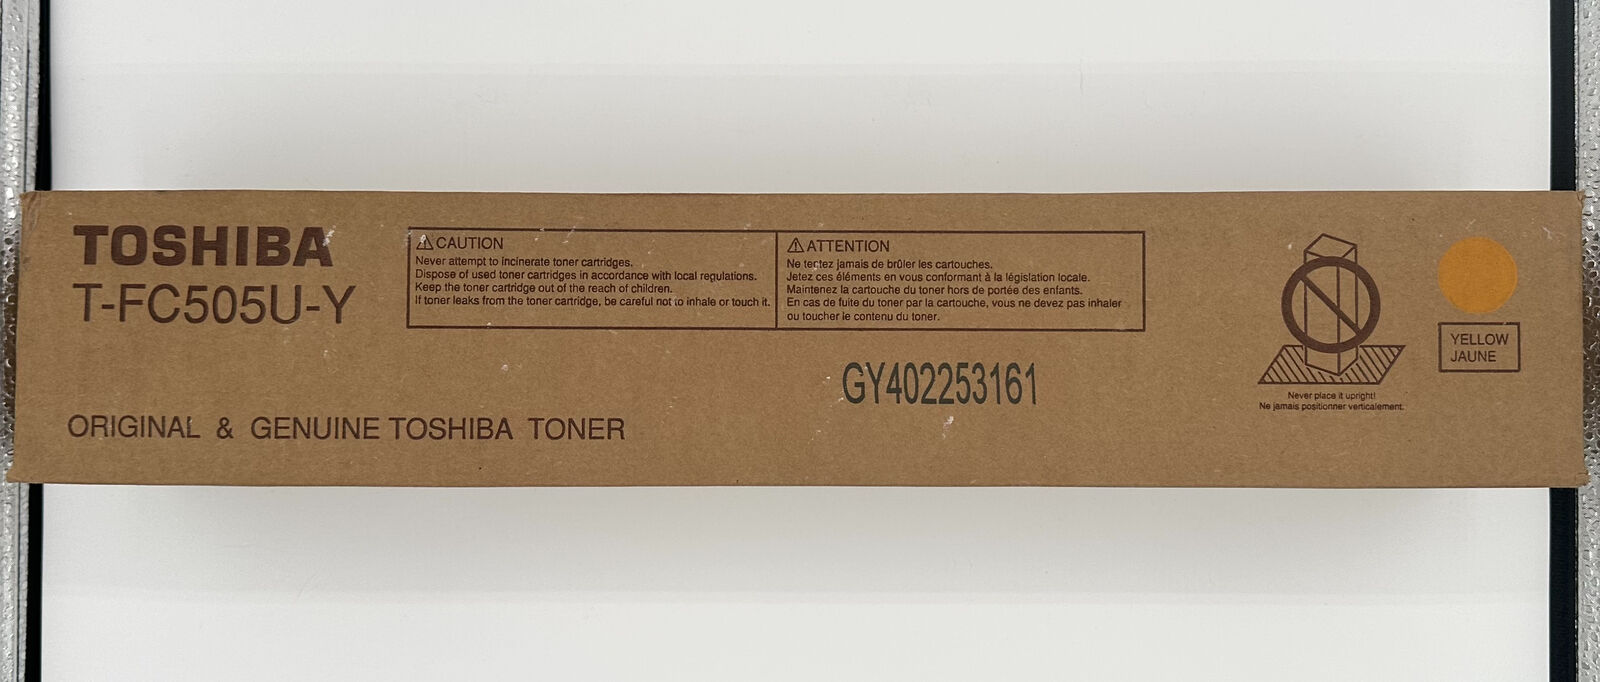 TOSHIBA T-FC505U-Y Print  YELLOW Toner Cartridge / FACTORY SEALED BOX